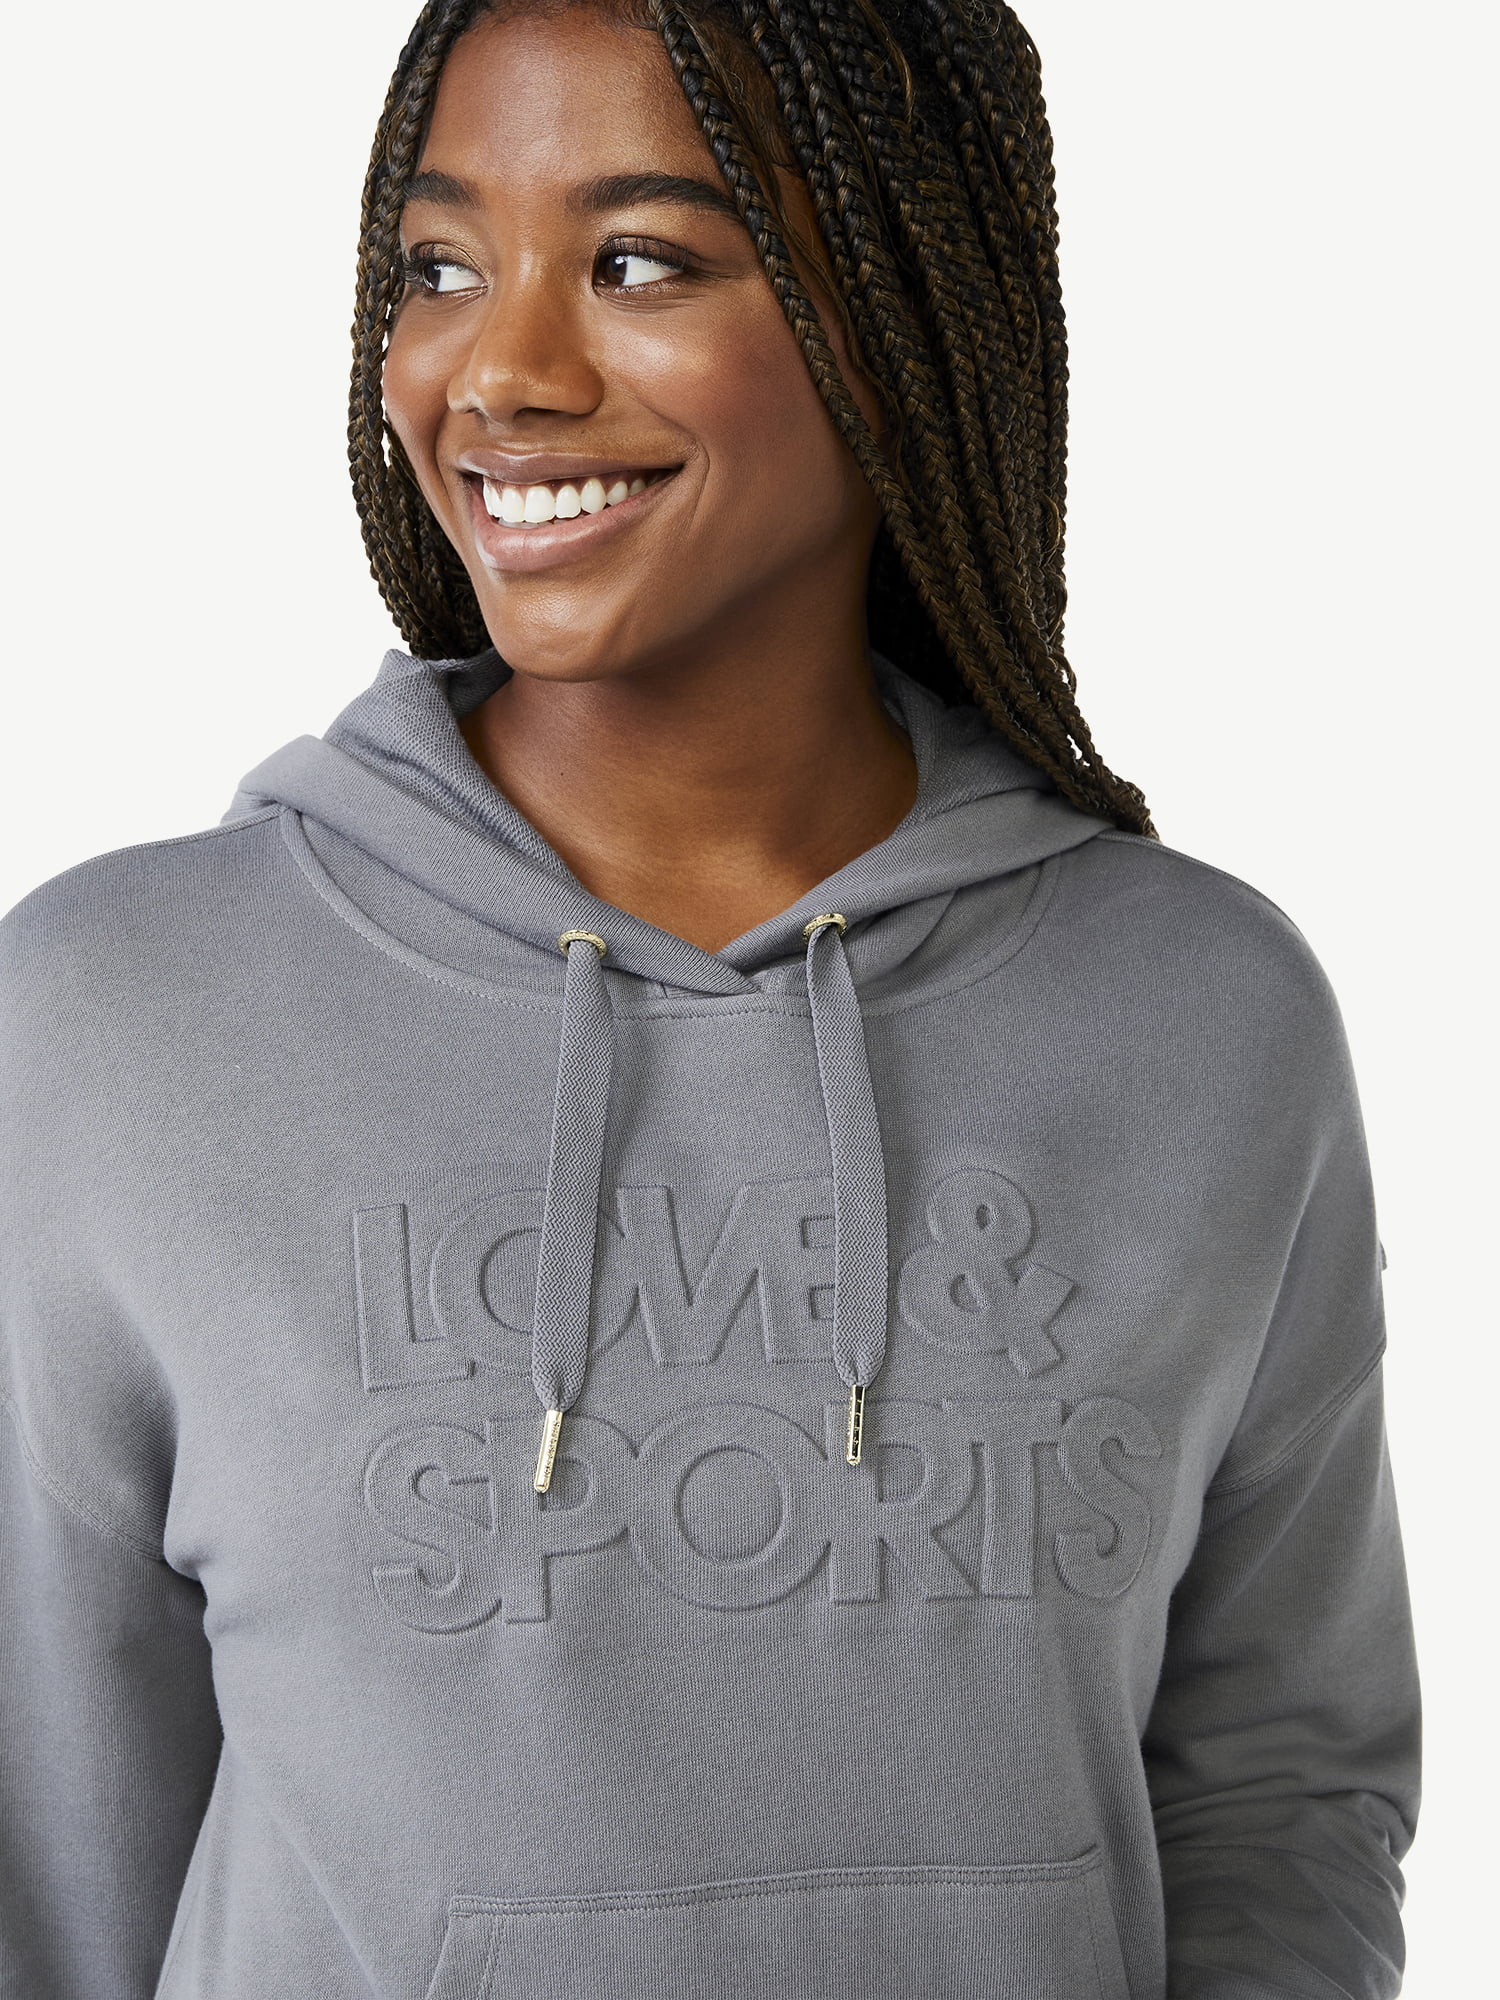 Smaak staan Spookachtig Love & Sports Women's Long Sleeve Pullover Hoodie - Walmart.com